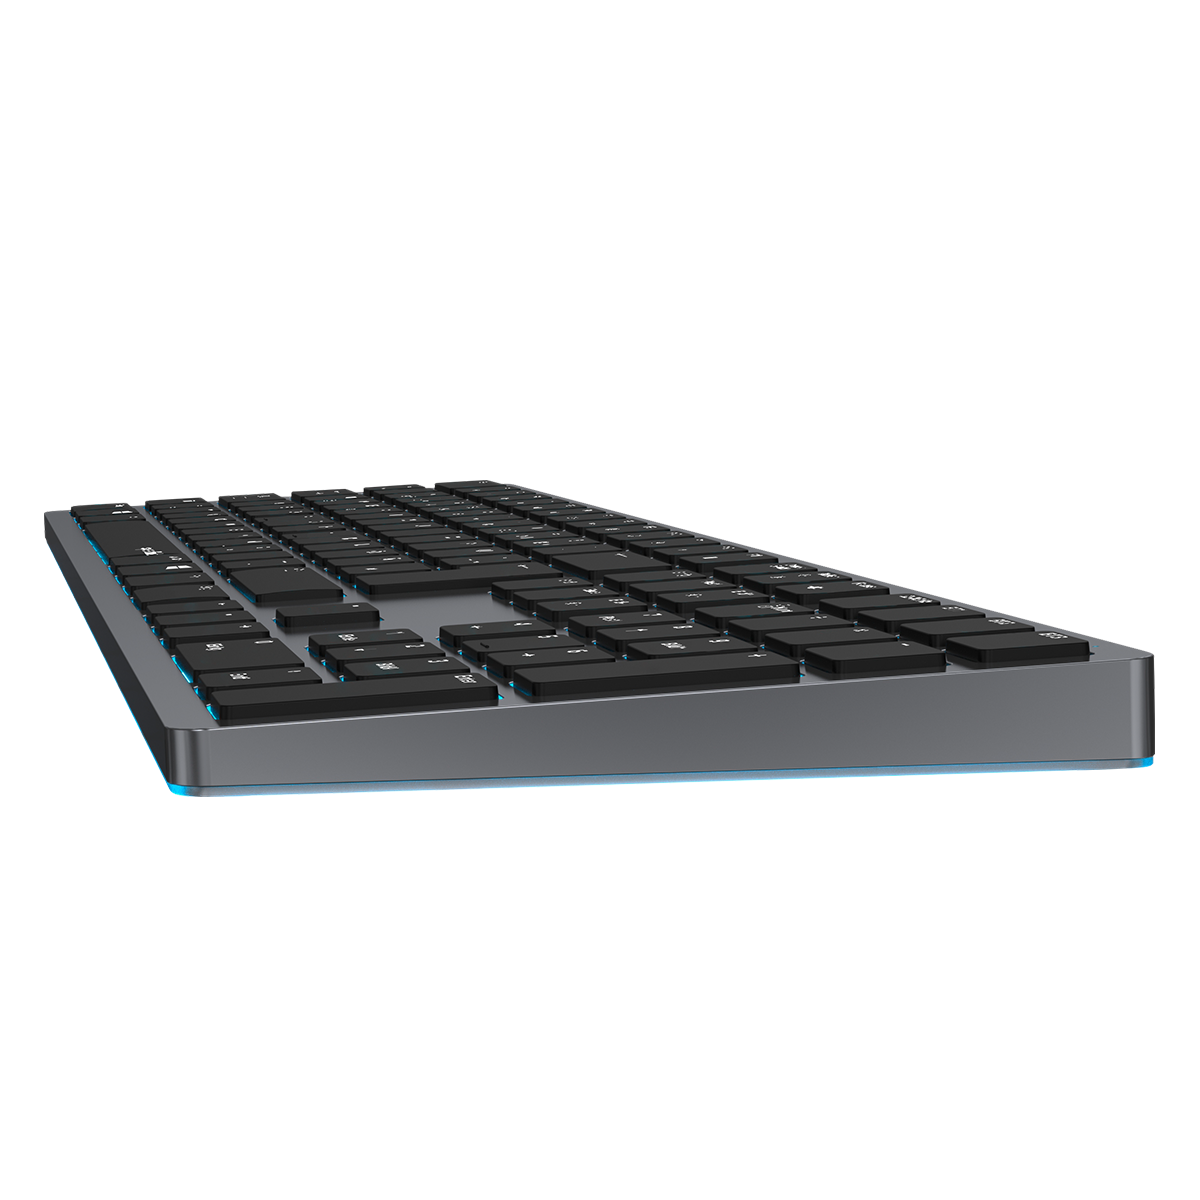 LEVIA Illuminated Rechargeable Metal Office Scissor Keyboard - Wireless, Bluetooth, grey - DE Layout